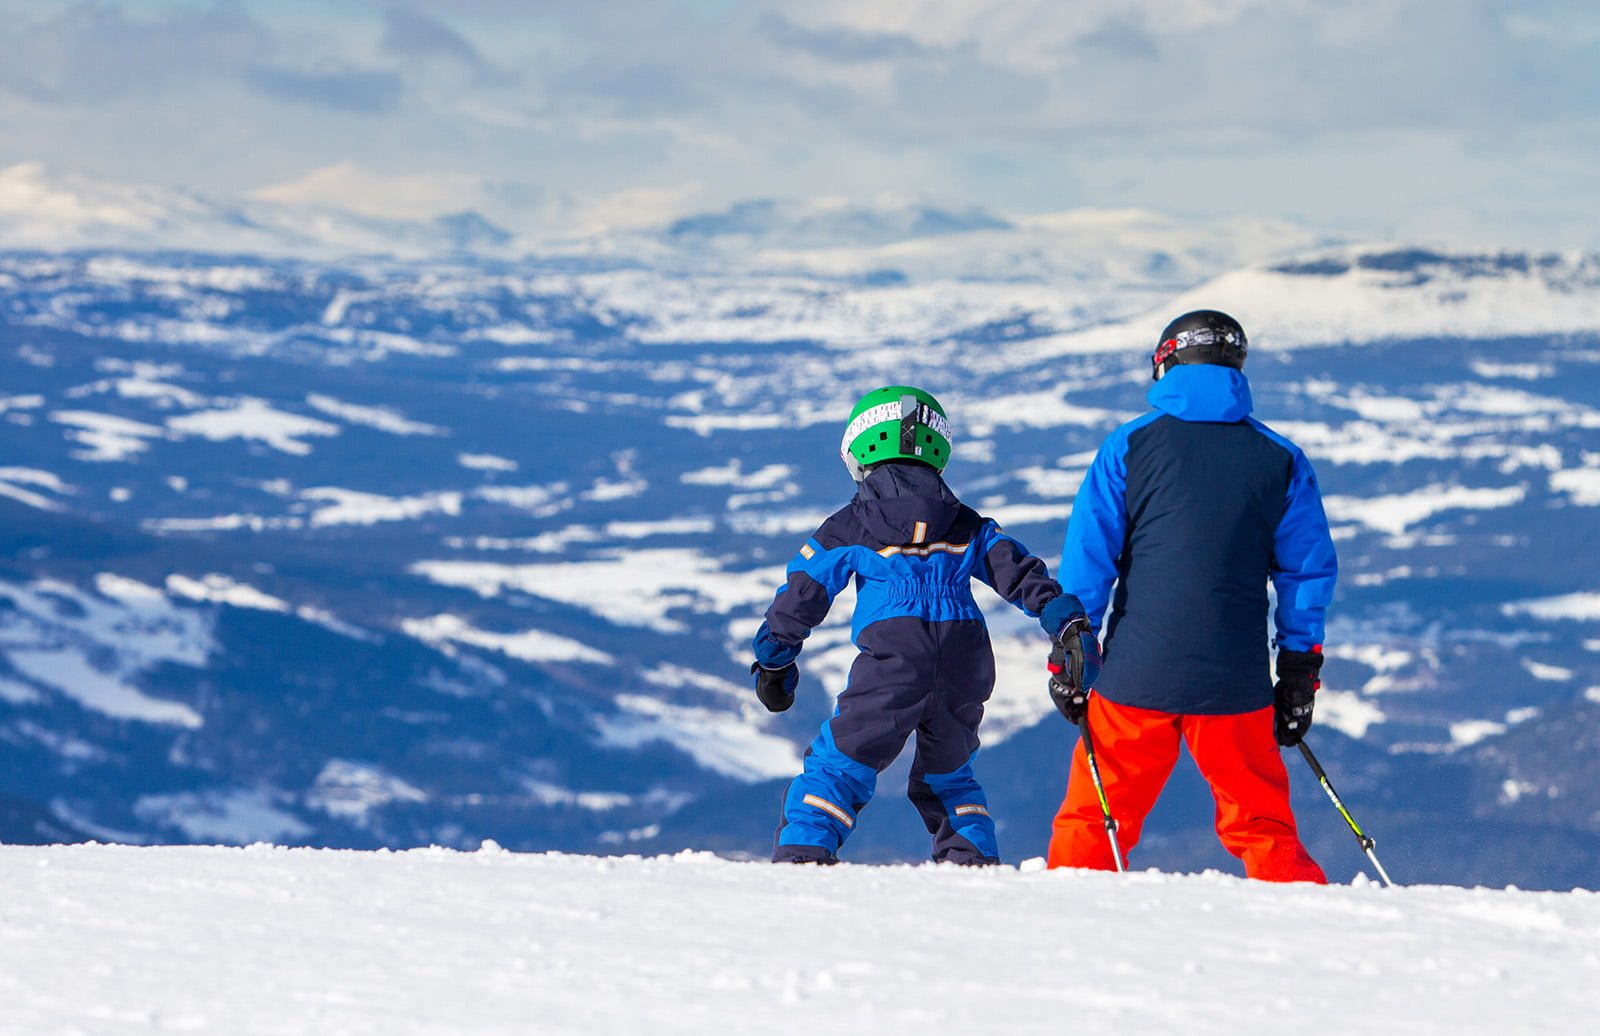 Downhill ski resort in Norway